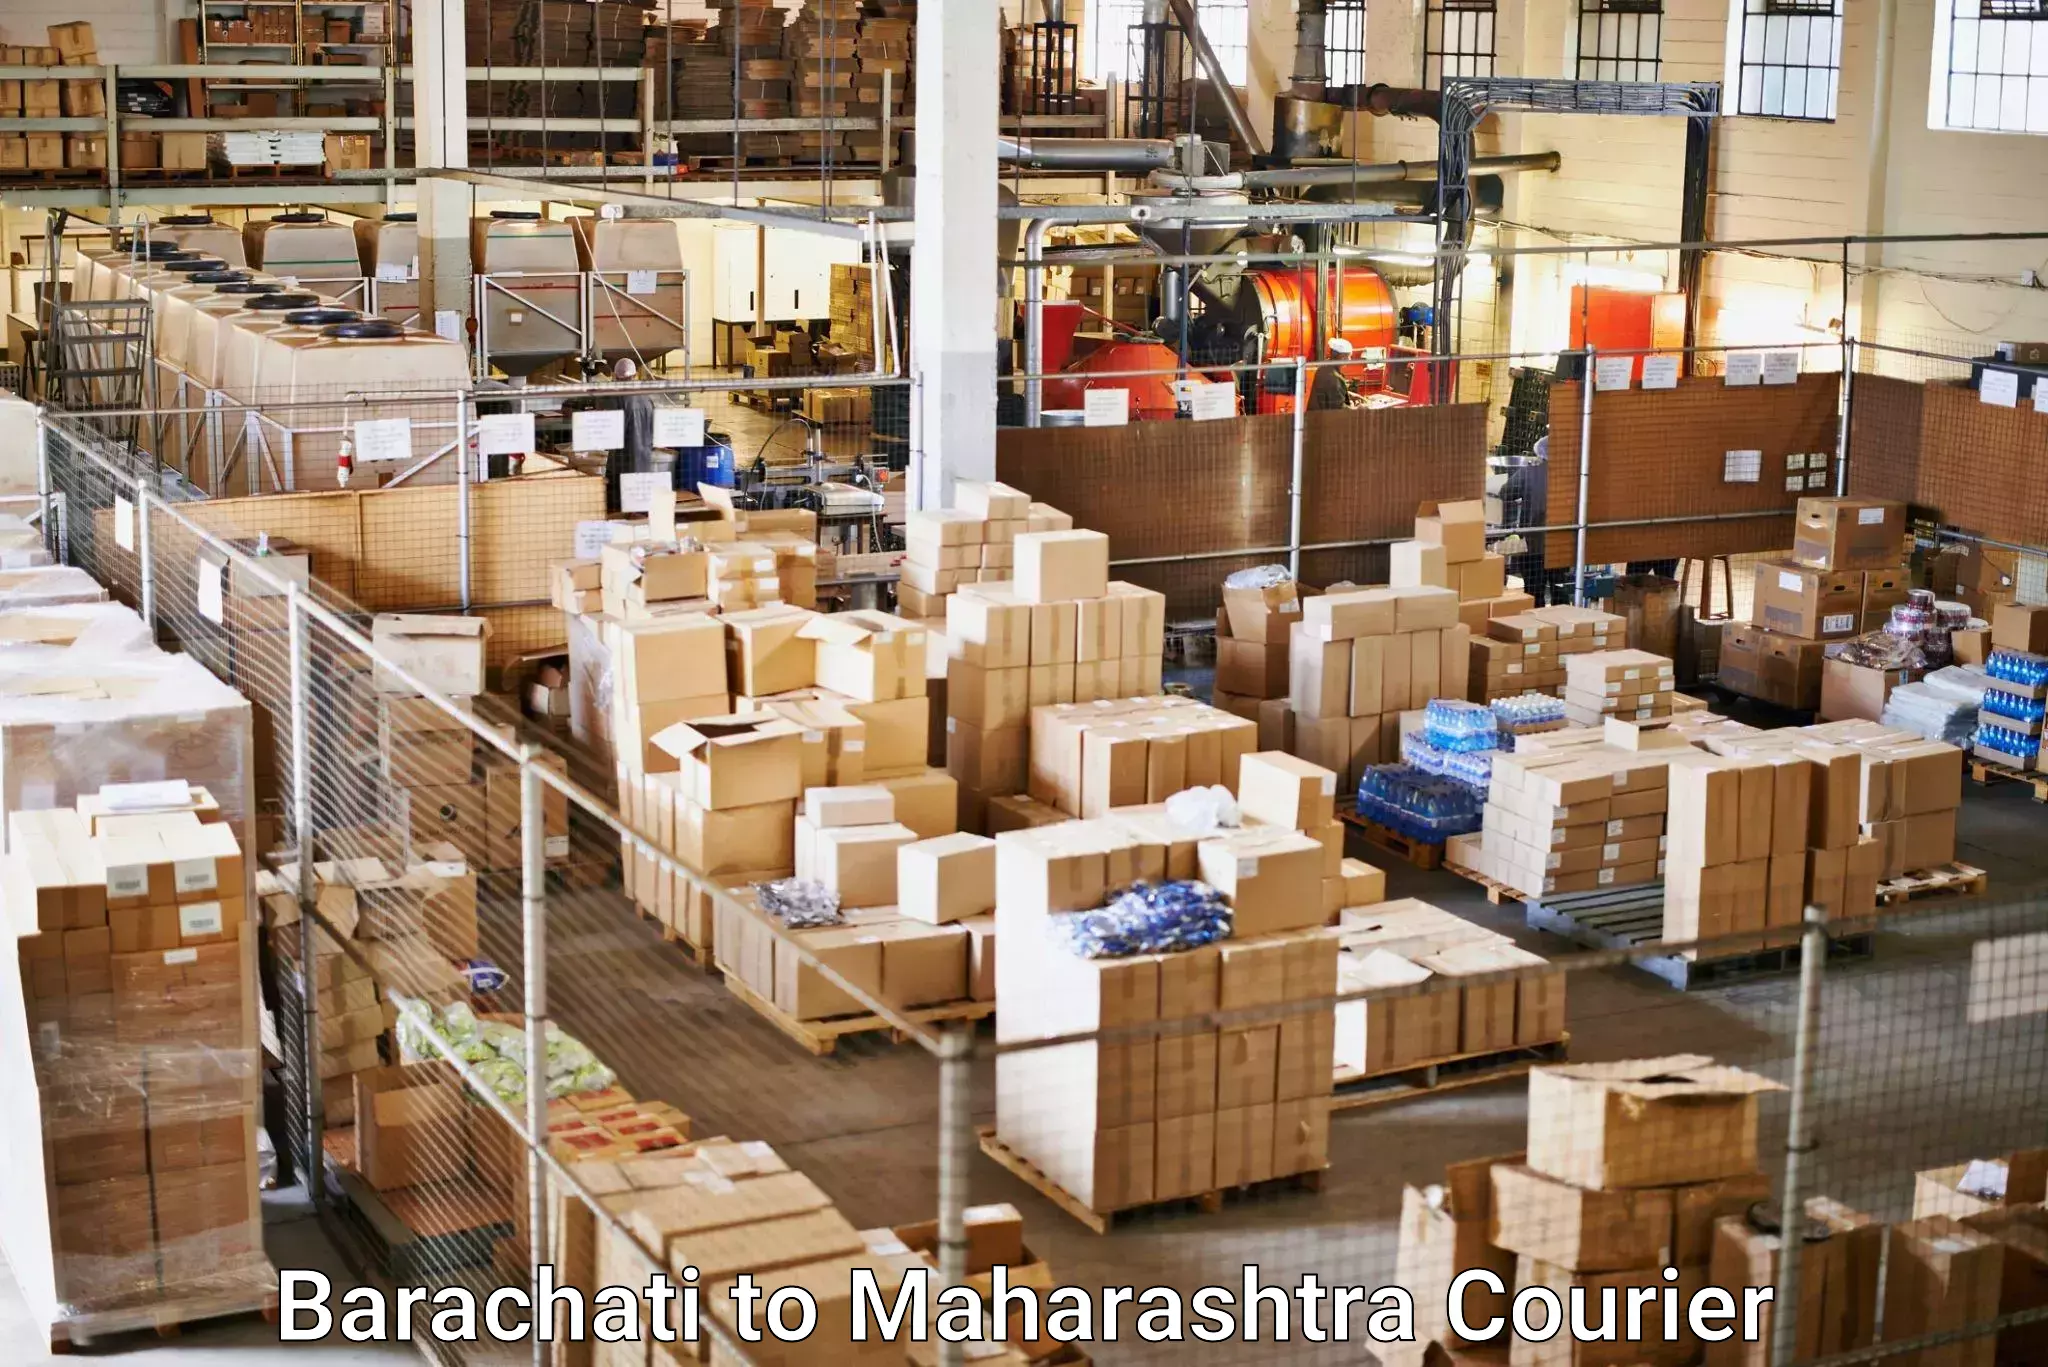 International parcel service Barachati to Maharashtra